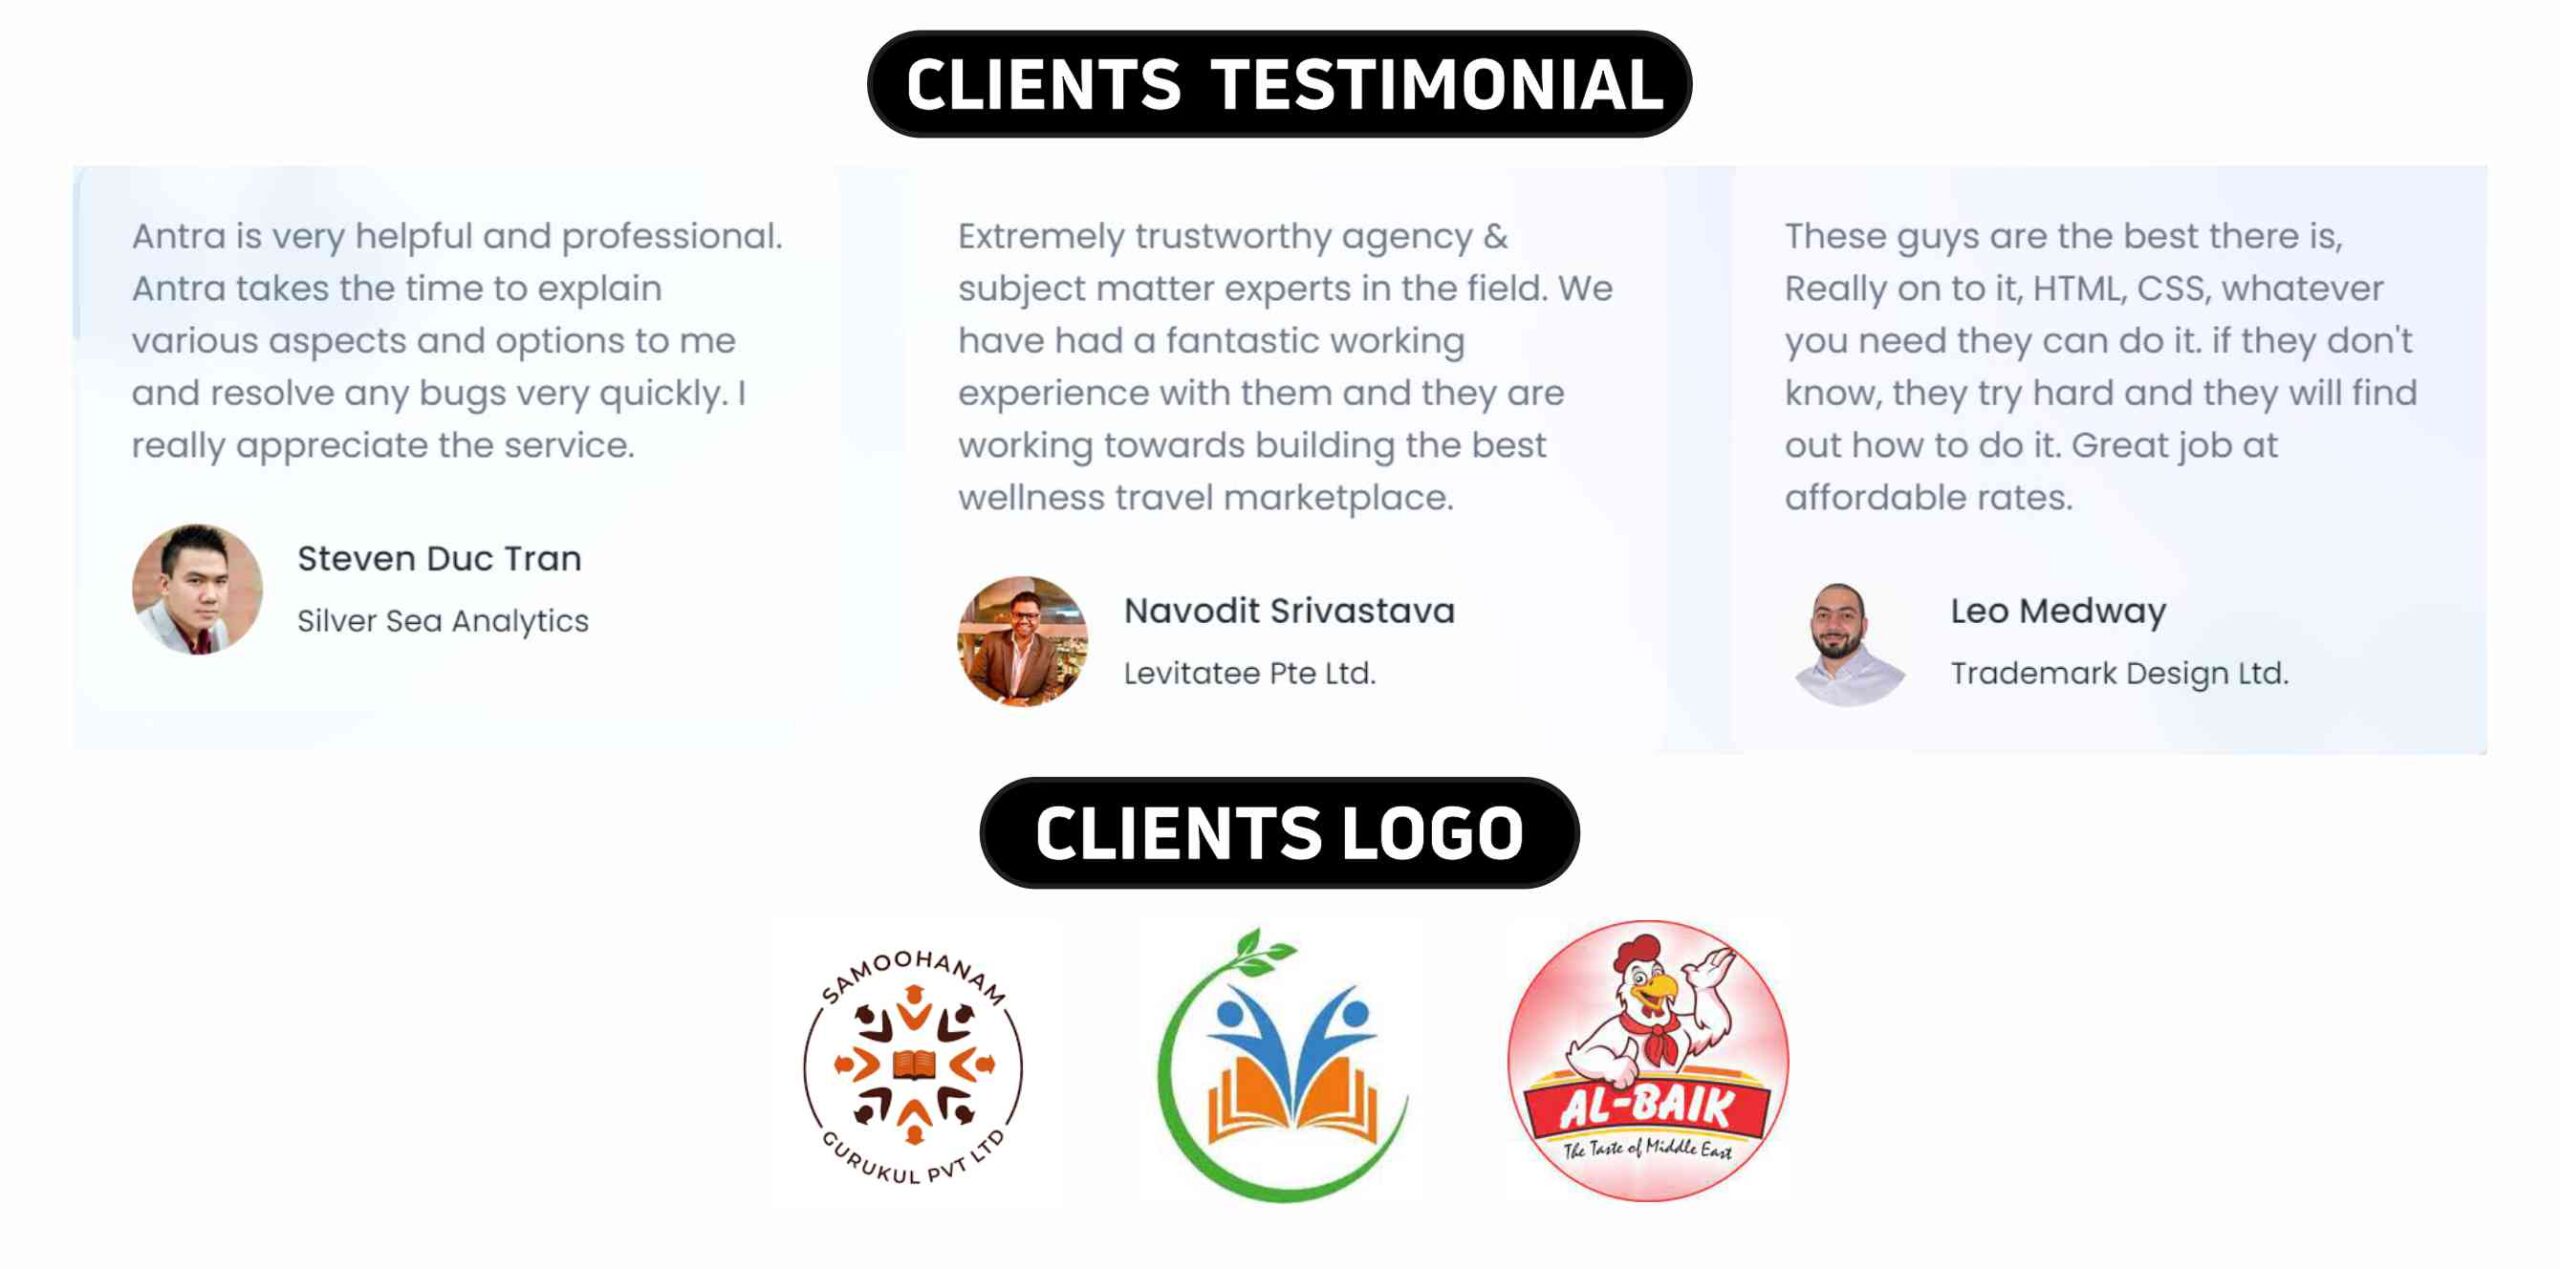 Dharmishi Technologies Clients Testimonials & Logos 